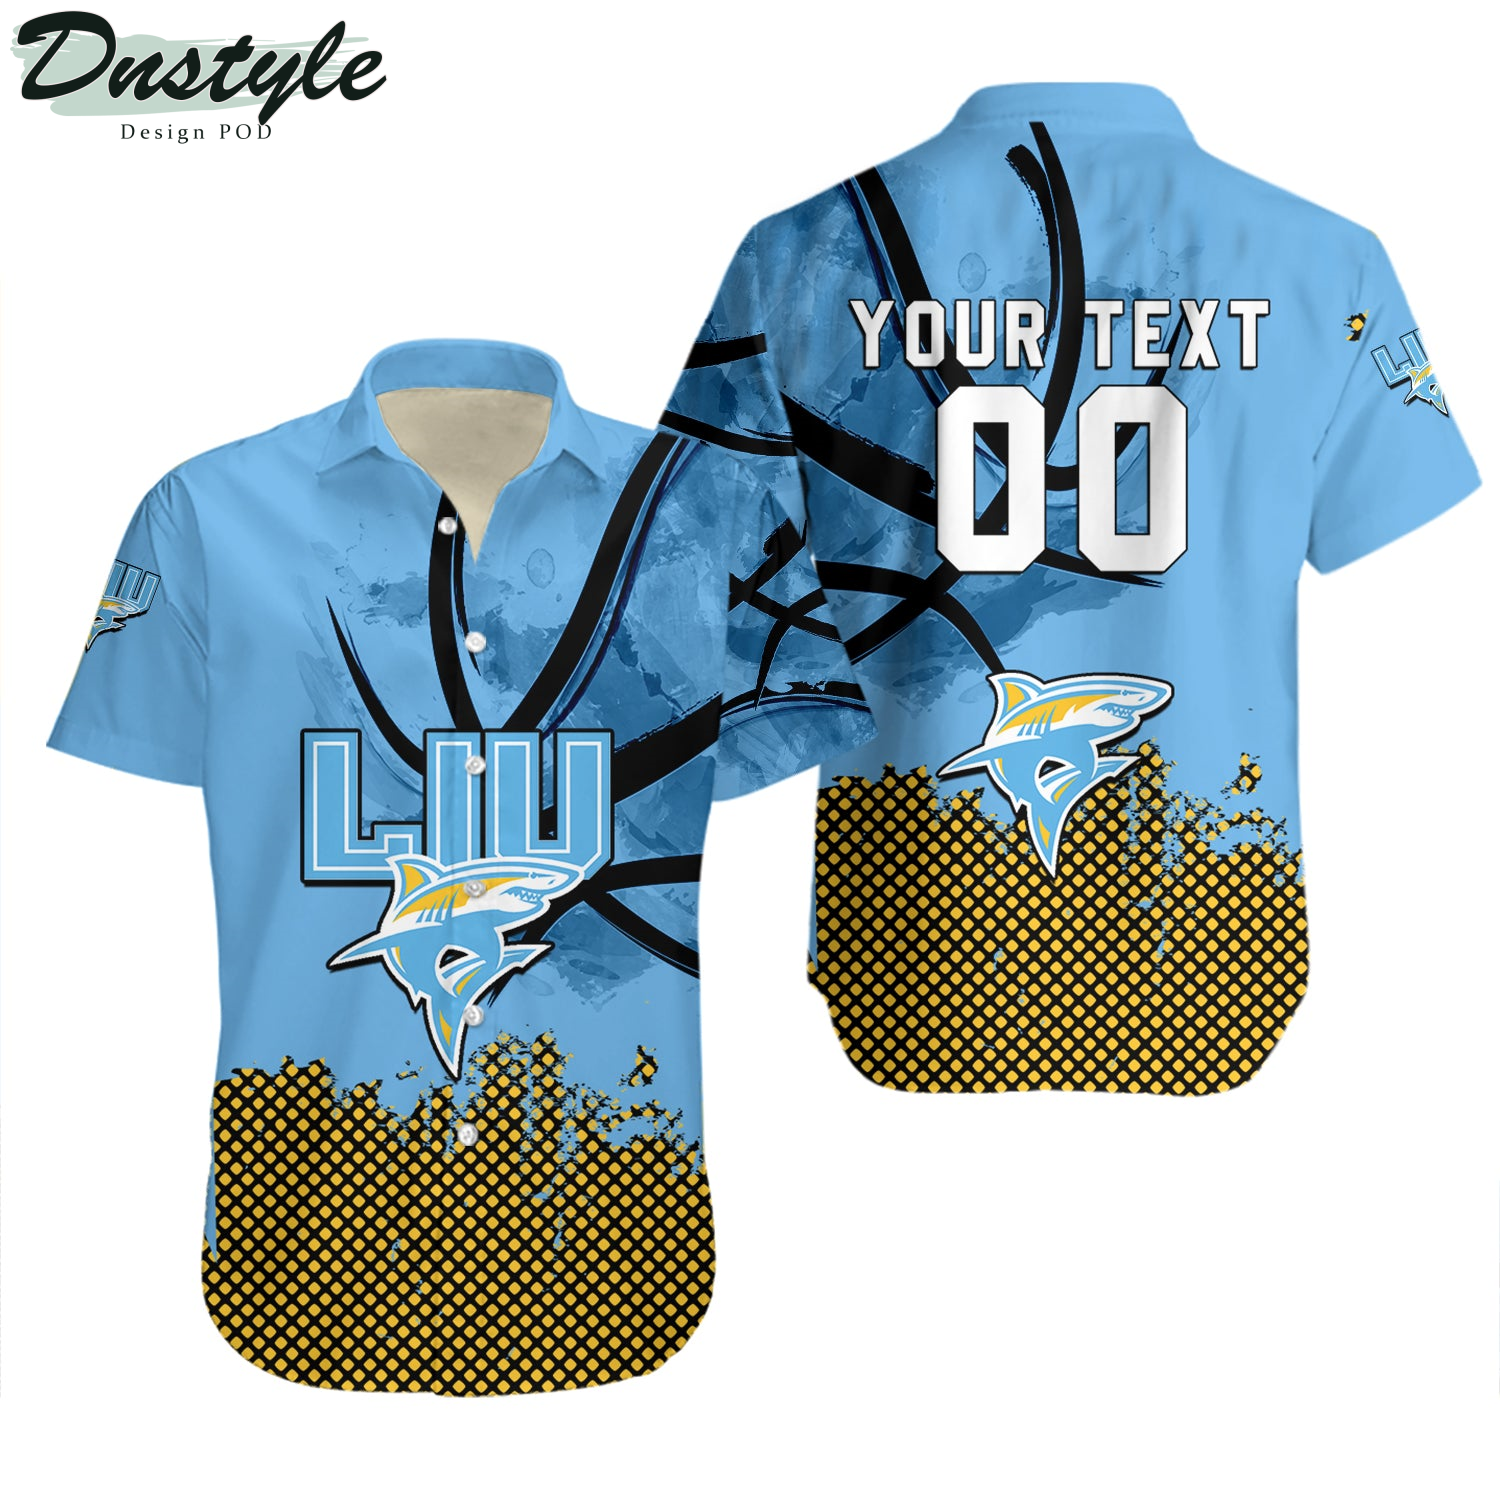 LIU Sharks Basketball Net Grunge Pattern Hawaii Shirt